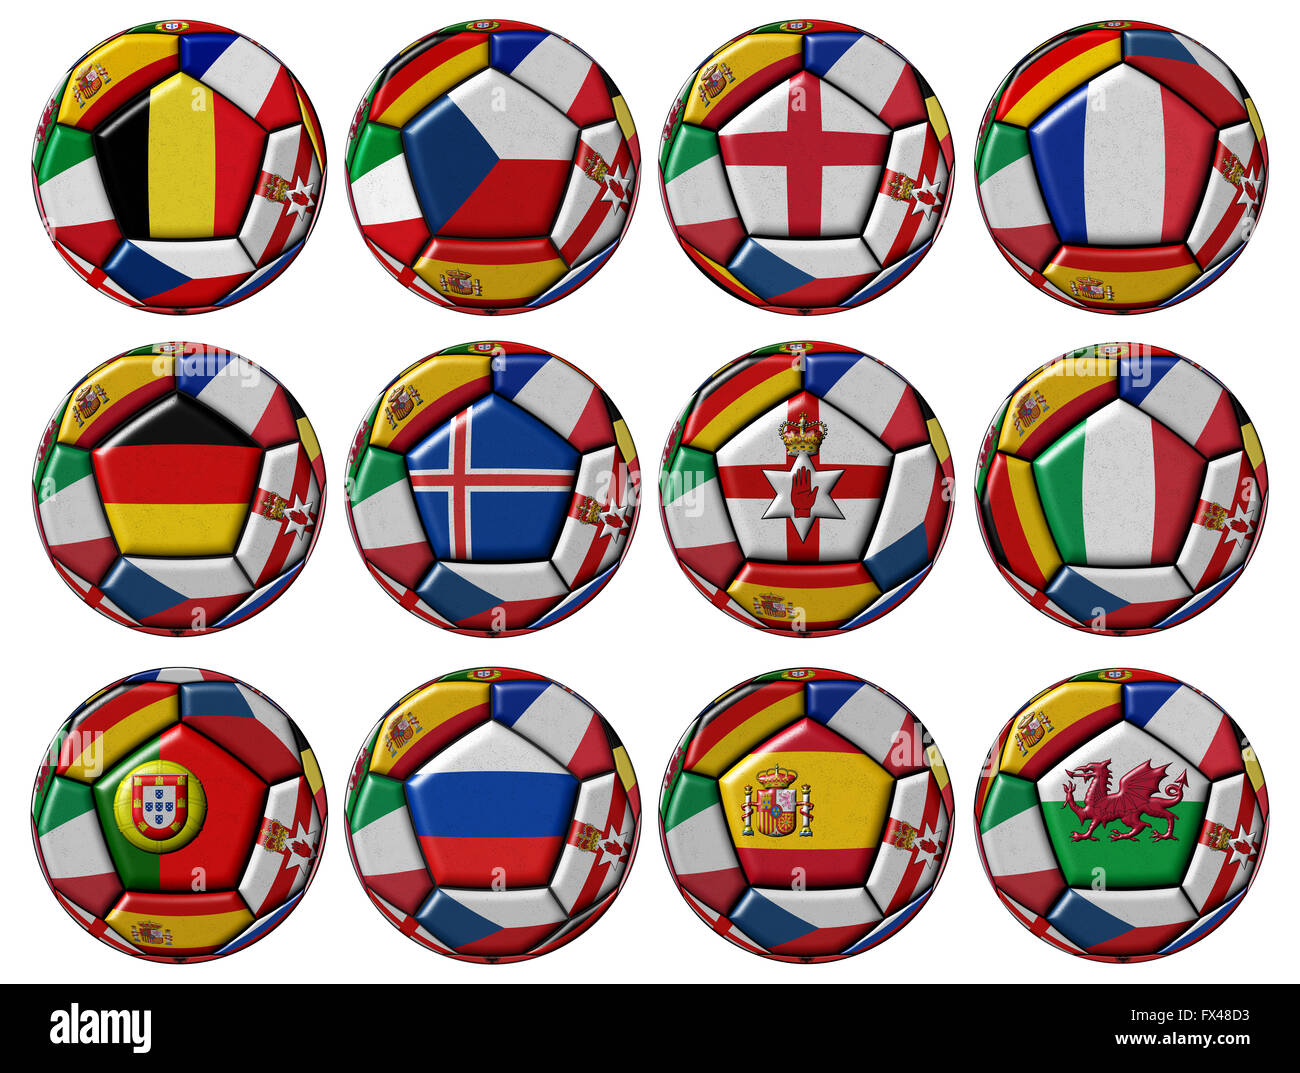 Le sfere con flag di vari paesi europei Foto Stock